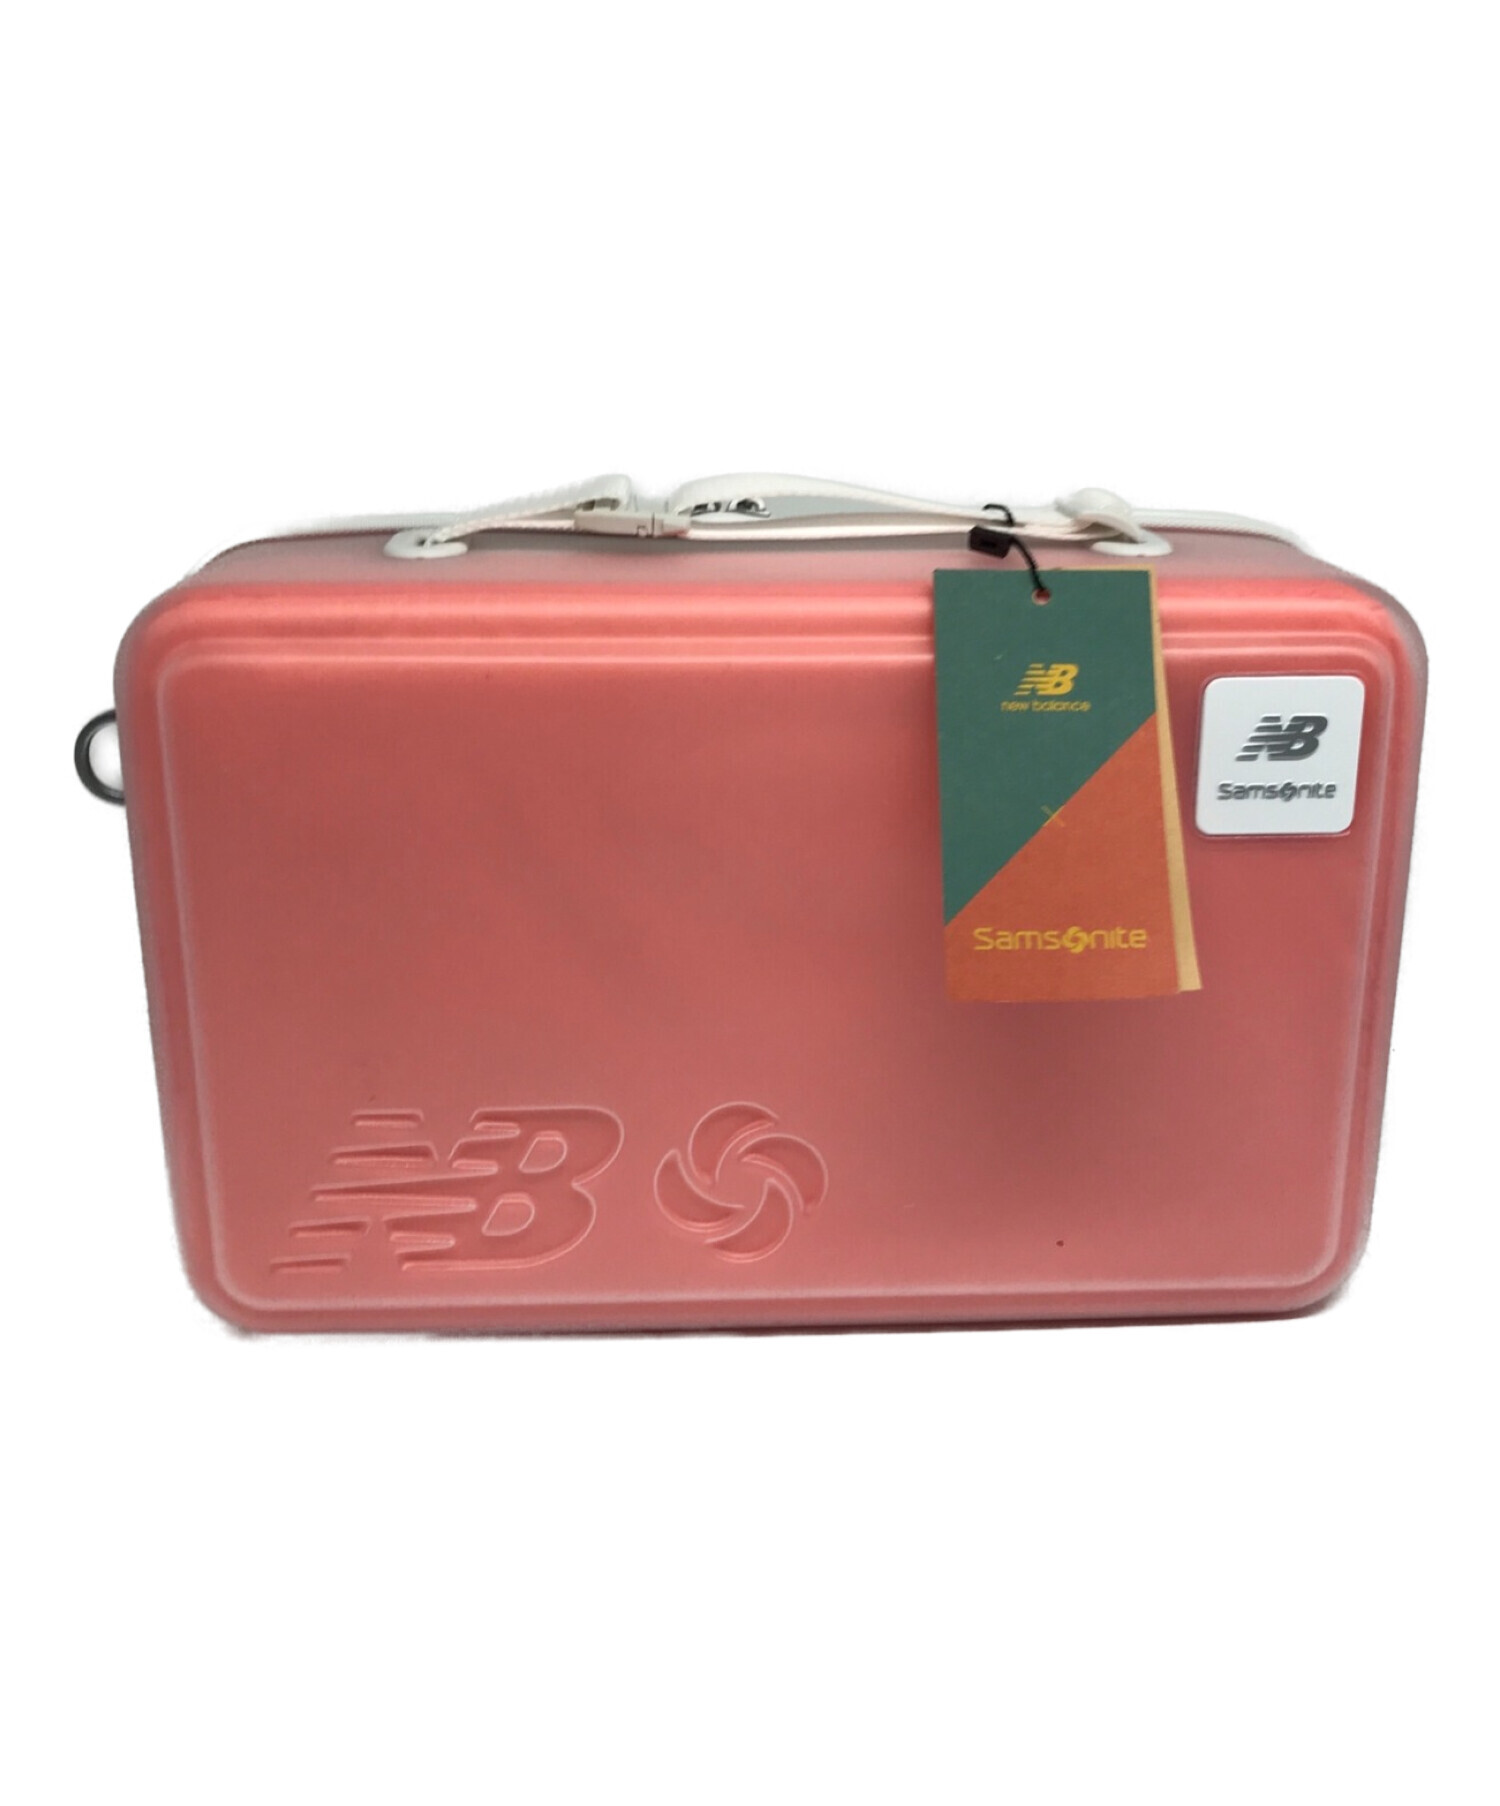 NEW BALANCE×Samsonite (ニューバランス×サムソナイト) SHOE BOX CROSSBODY BAG ピンク 未使用品